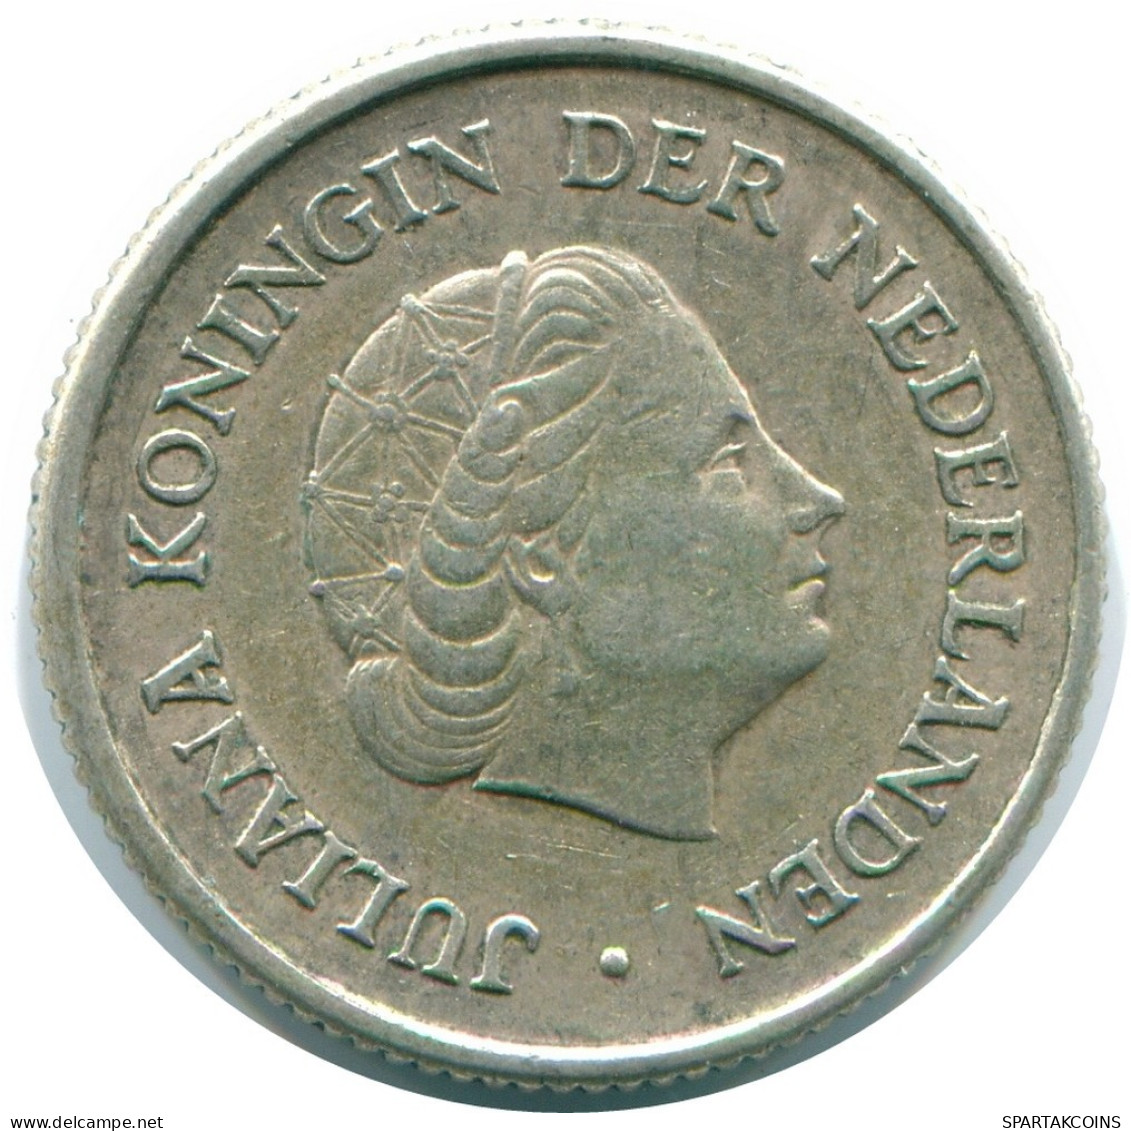 1/4 GULDEN 1967 NETHERLANDS ANTILLES SILVER Colonial Coin #NL11528.4.U.A - Niederländische Antillen